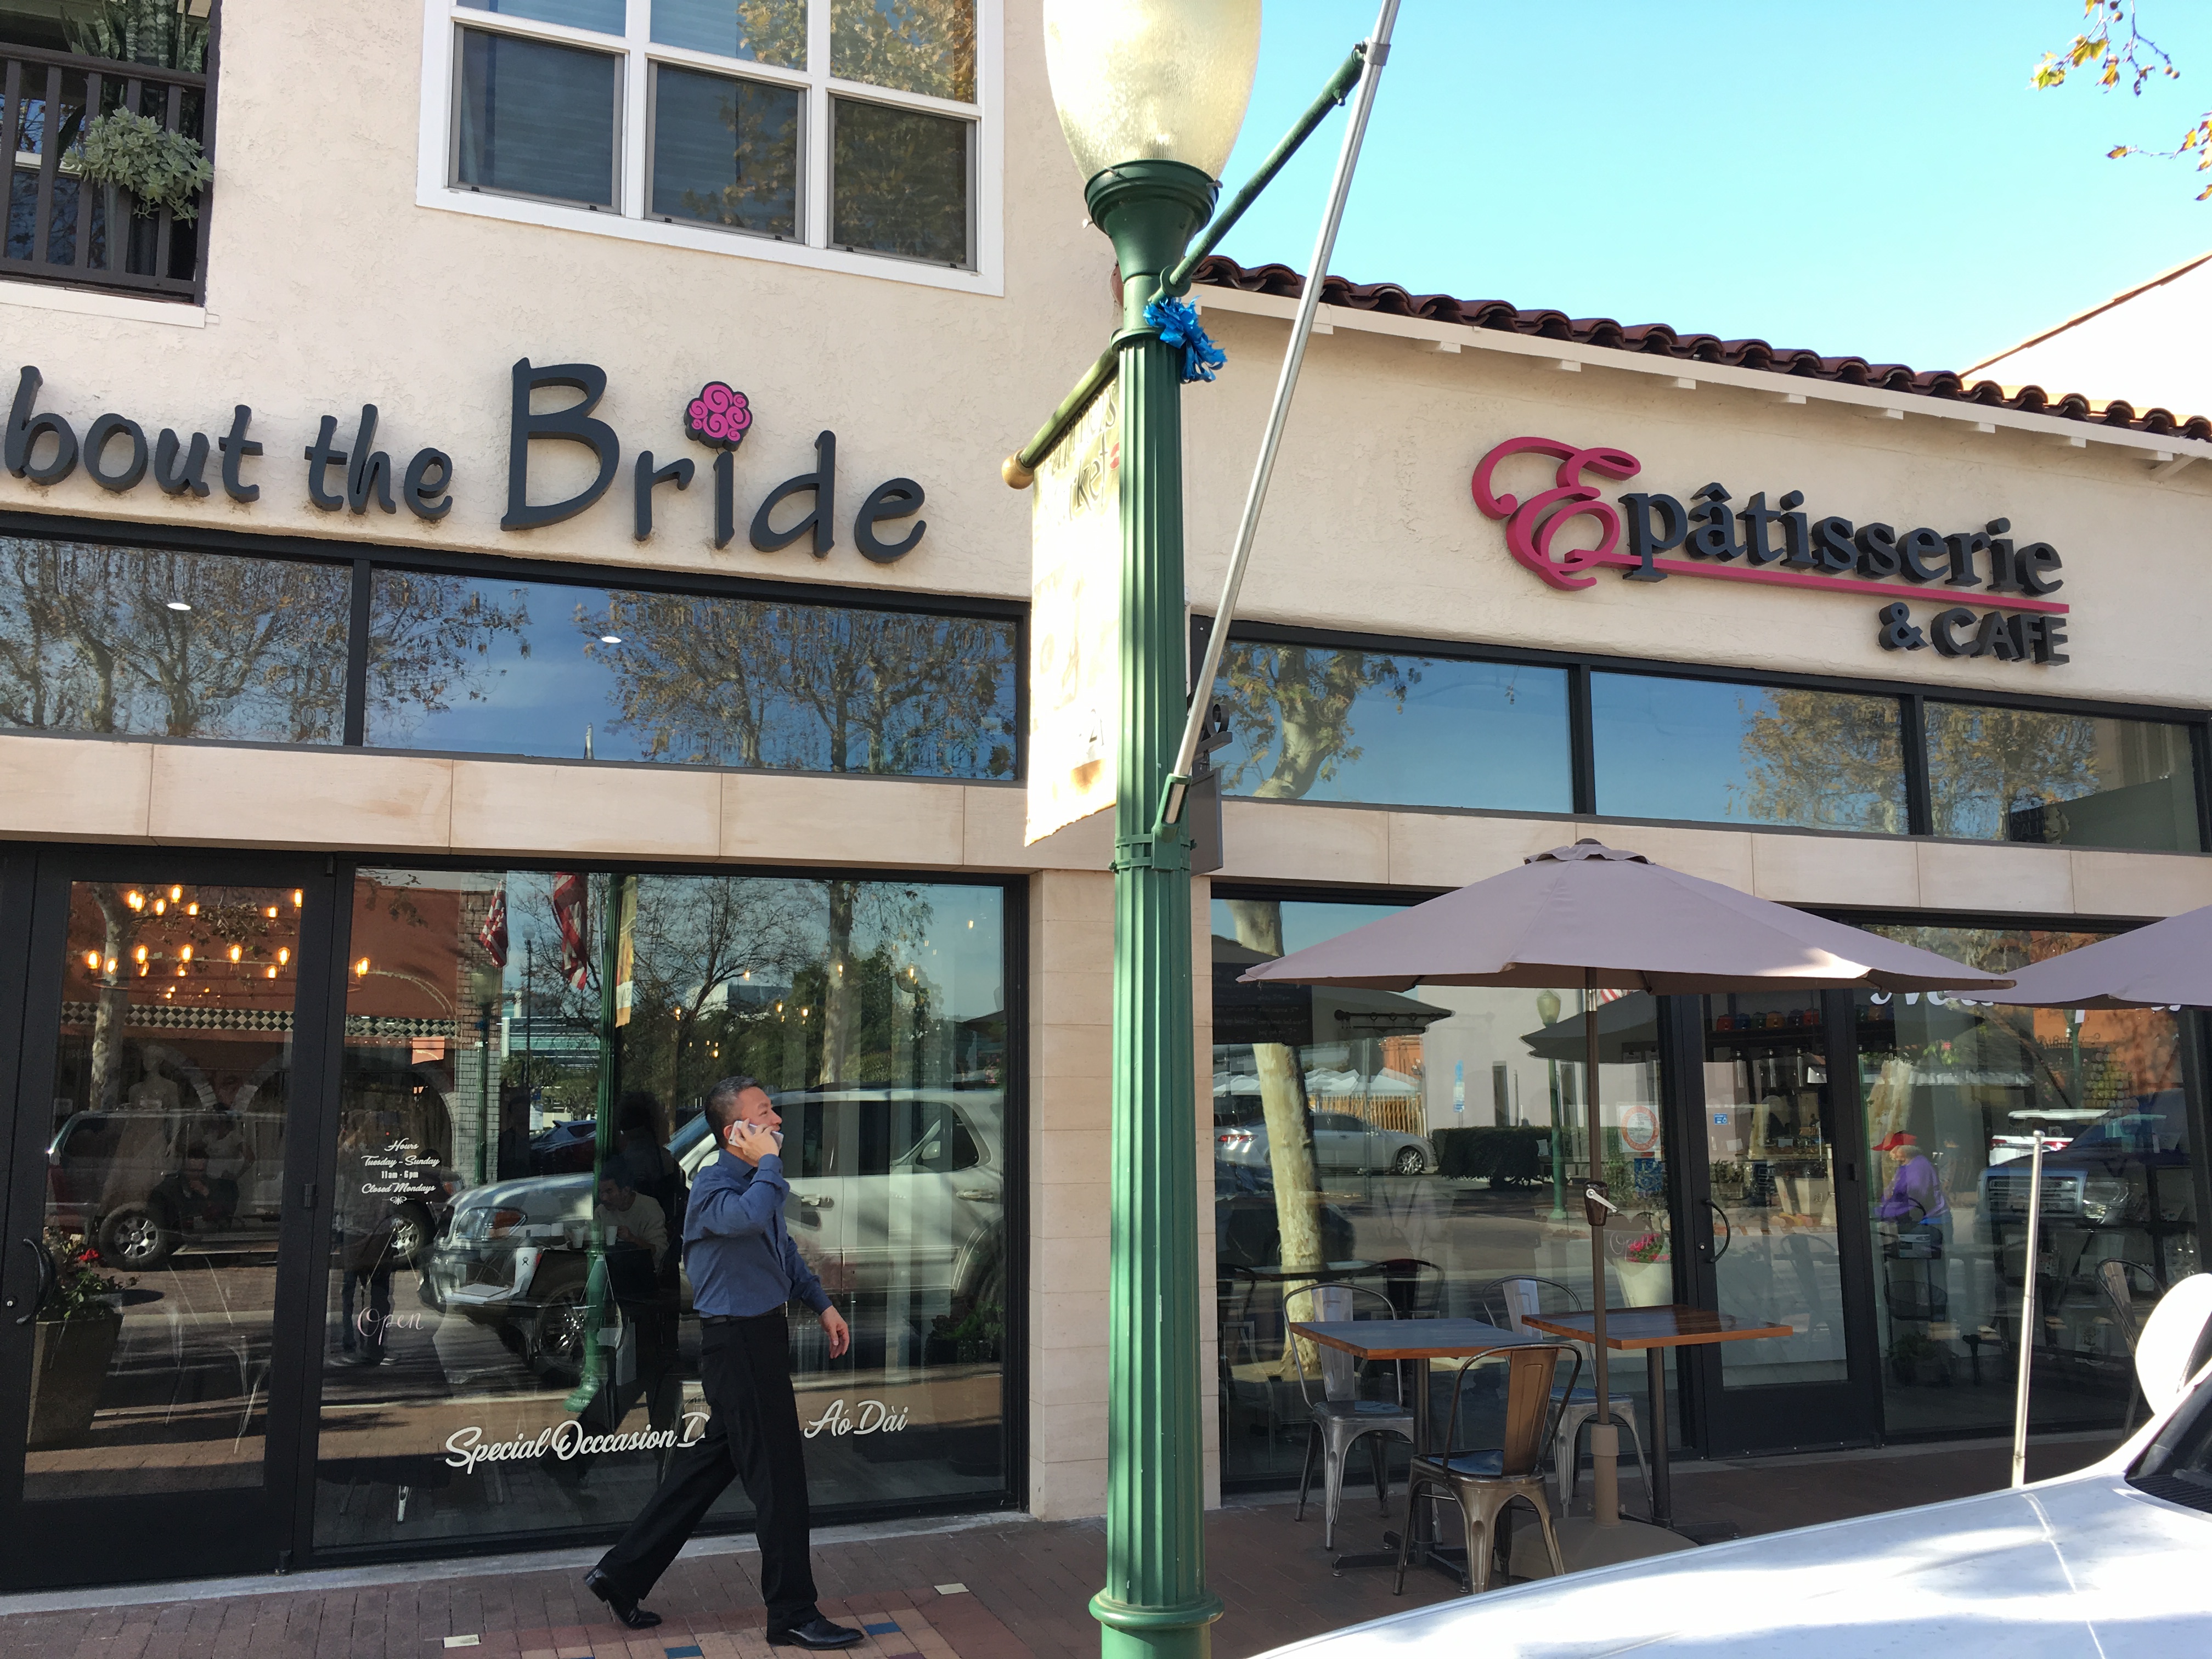 French Cafe Lifestyle In Garden Grove Orange County Tribune